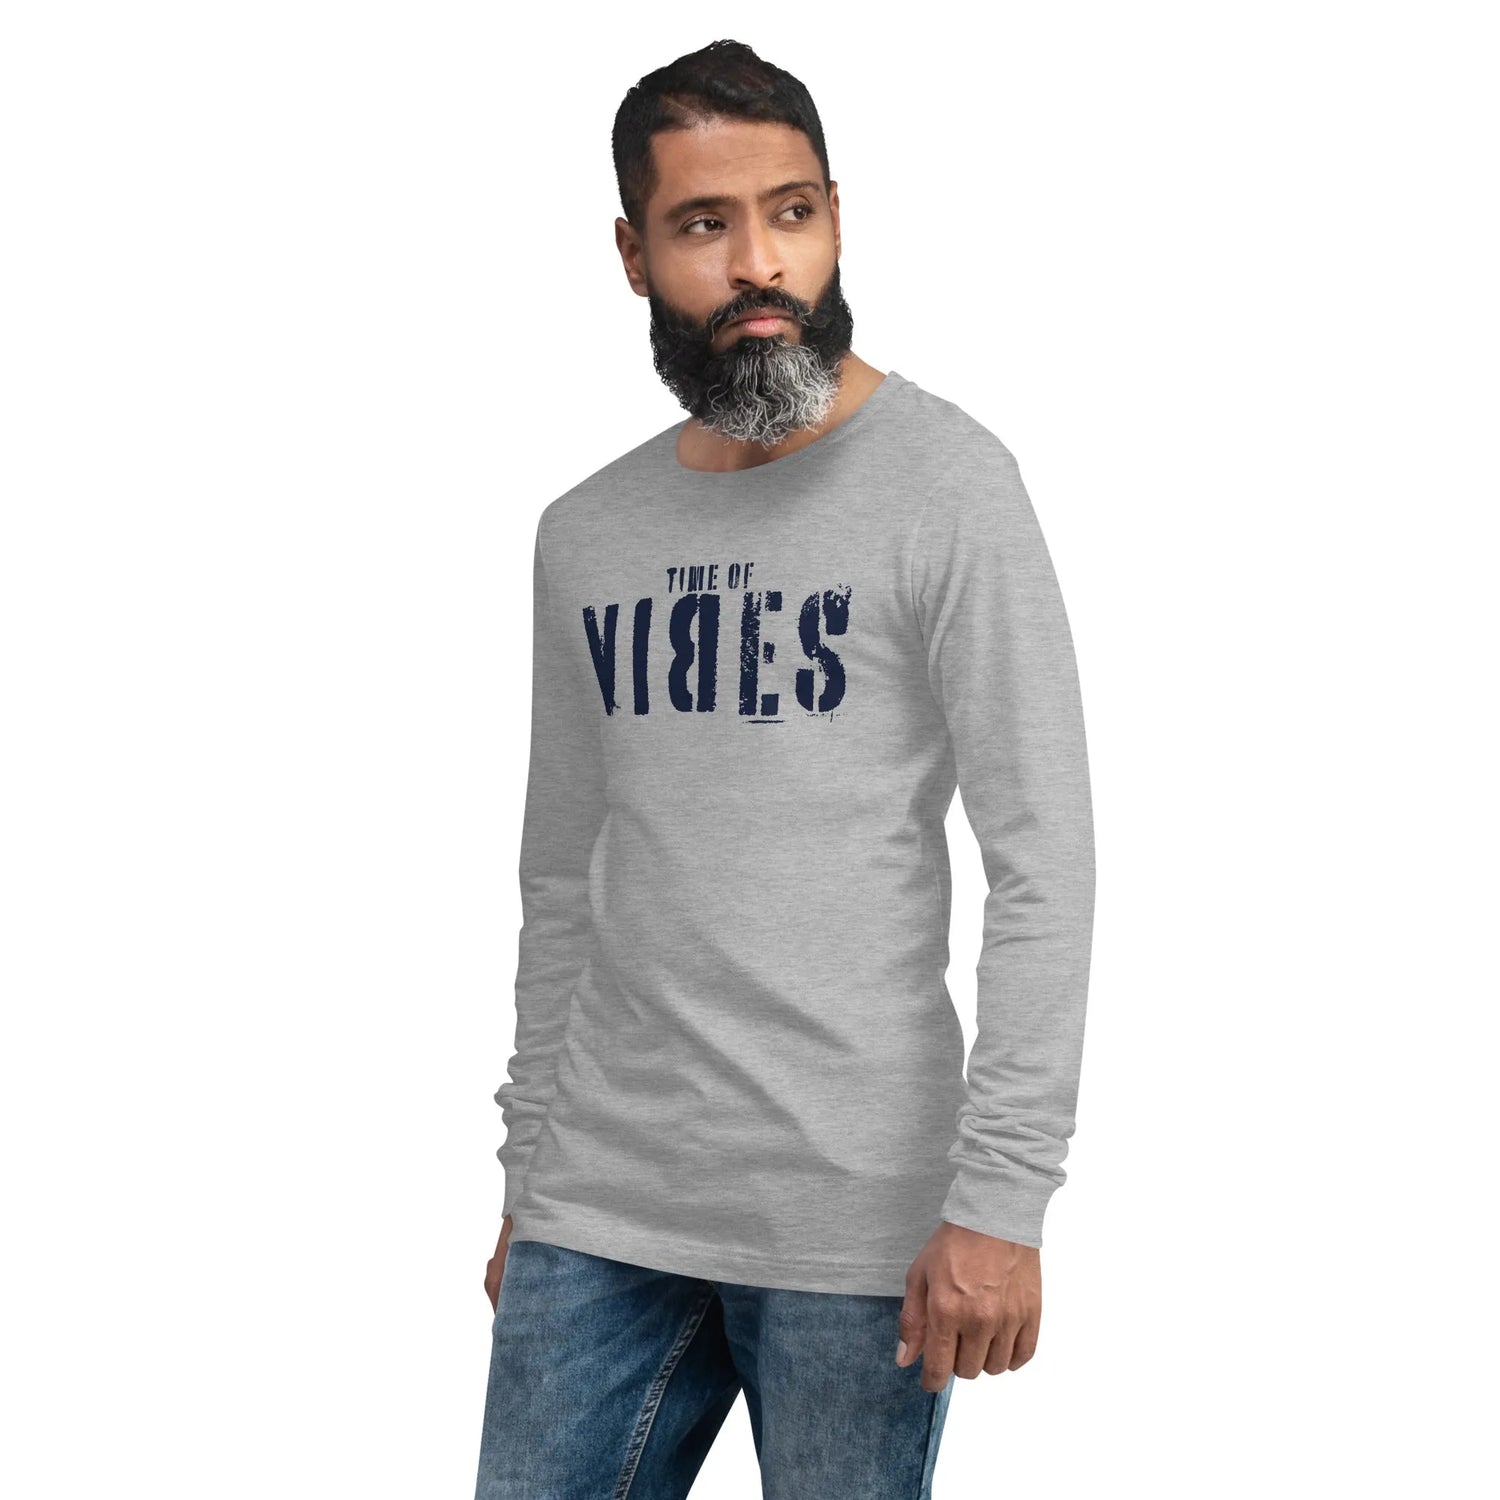 Herren Langarm Baumwoll T-Shirt VIBES (Grau/Blau)